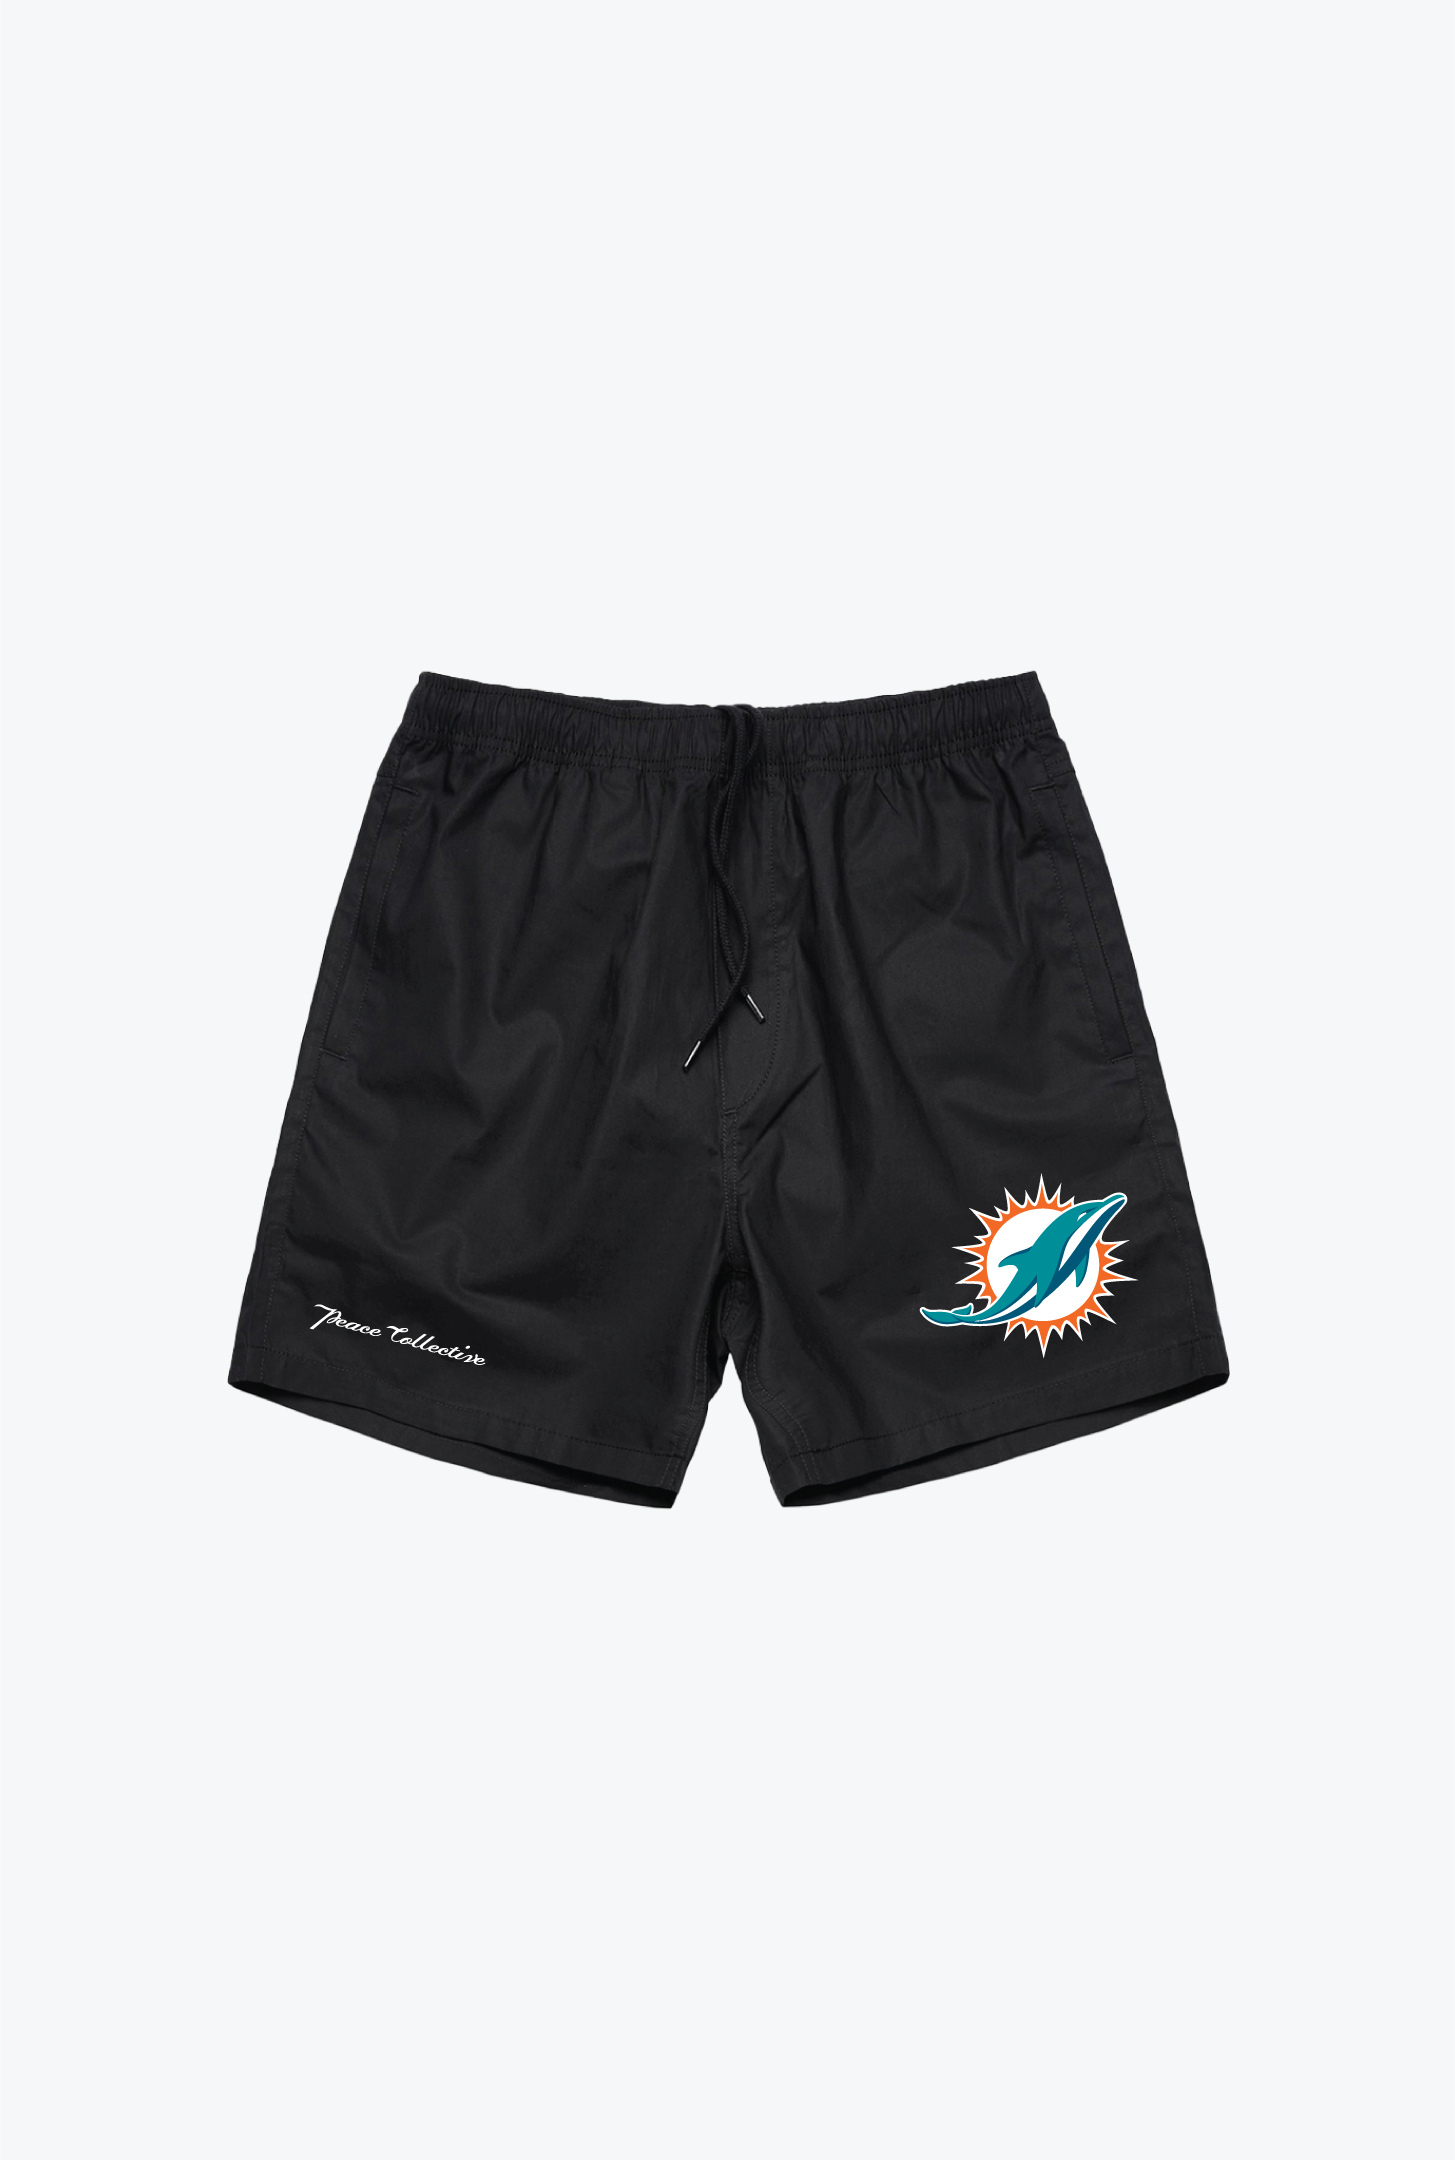 Miami Dolphins Board Shorts - Black